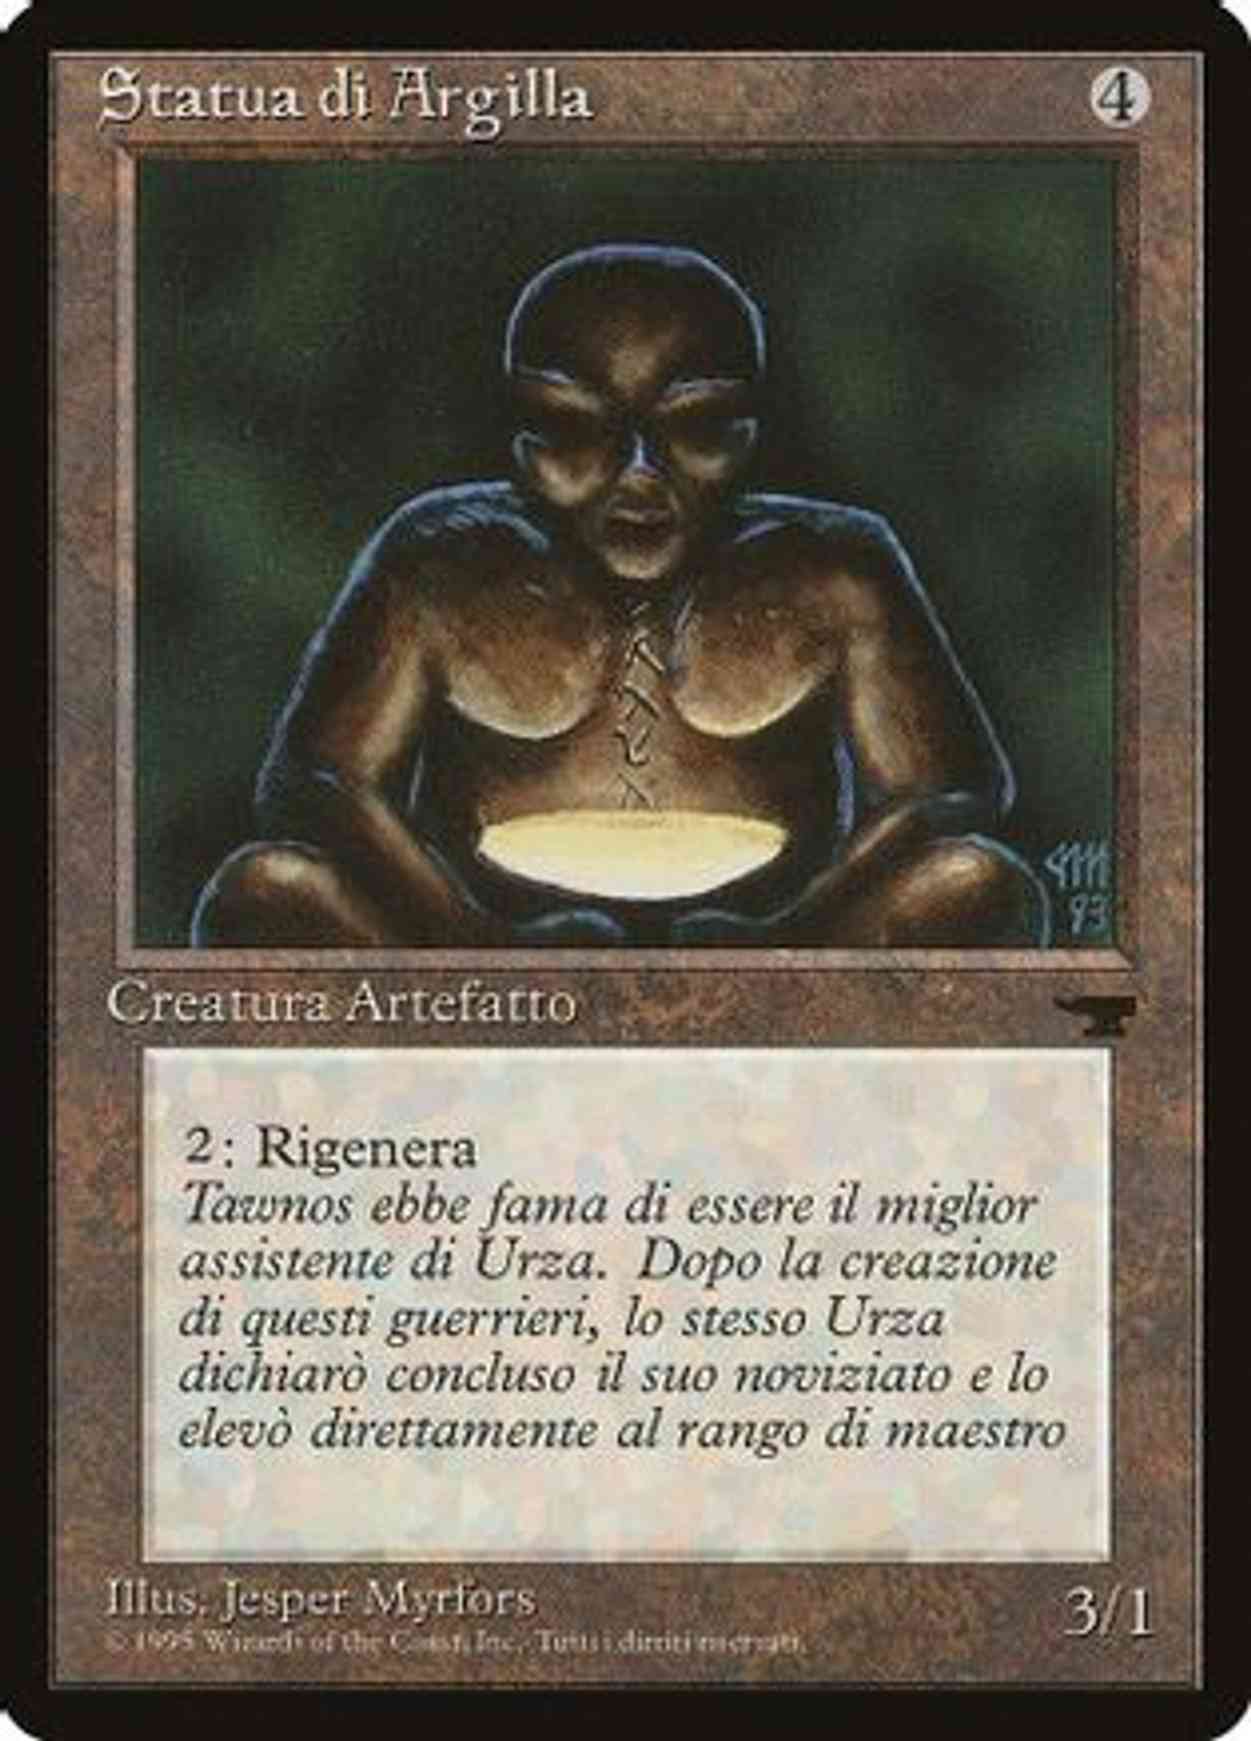 Clay Statue (Italian) - "Statua di Argilla" magic card front